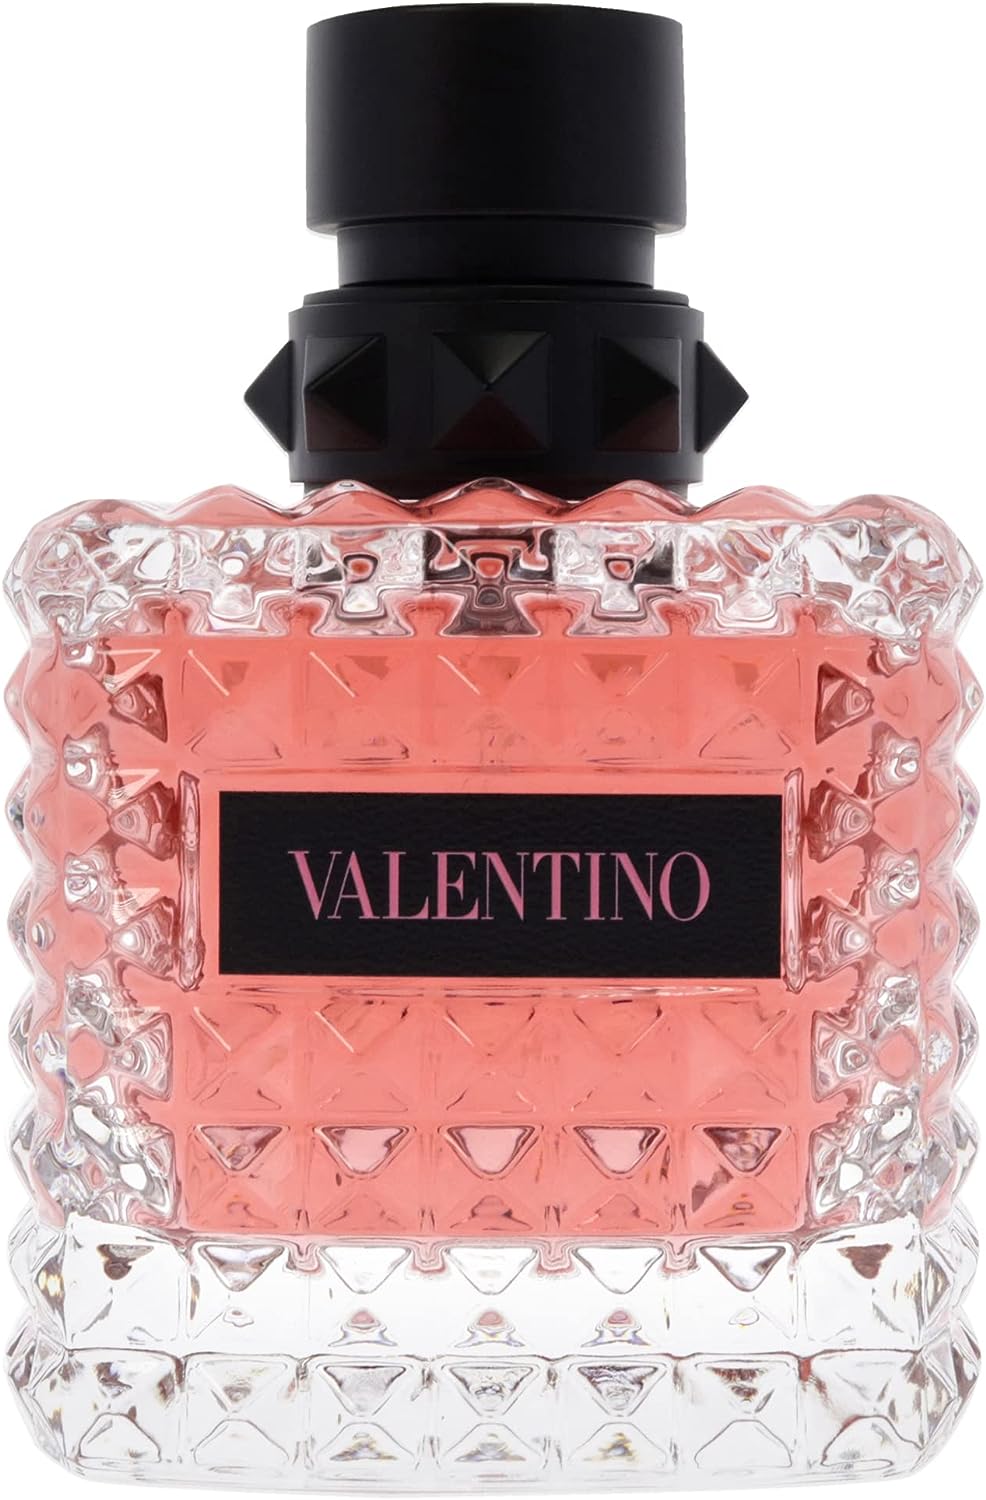 Valentino Donna Born In Roma For Women Eau De Parfum, 100 Ml